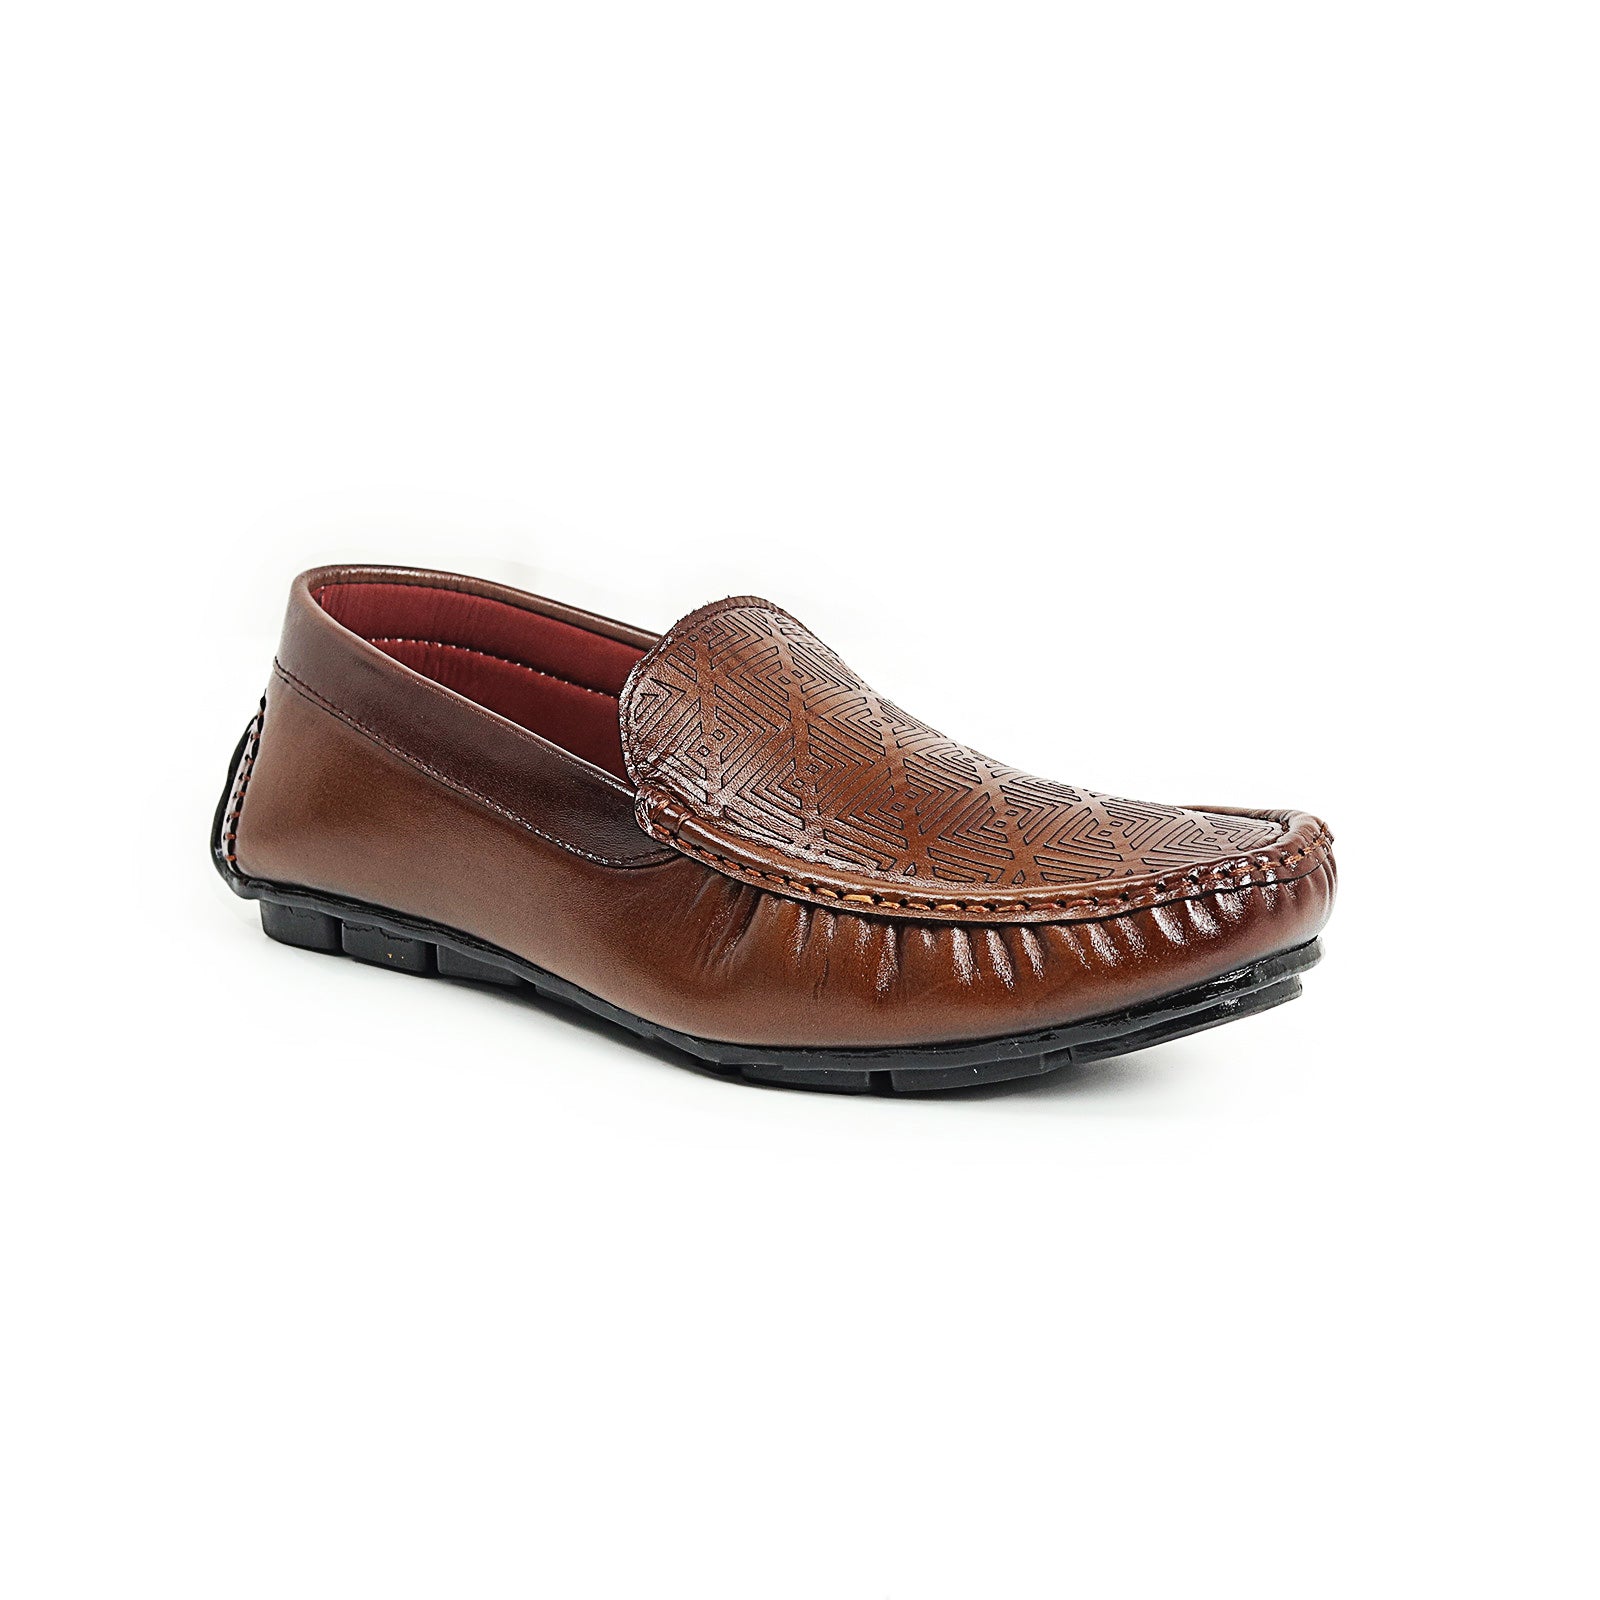 Zays Leather Premium Loafer For Men (Brown)- ZAYSSF31